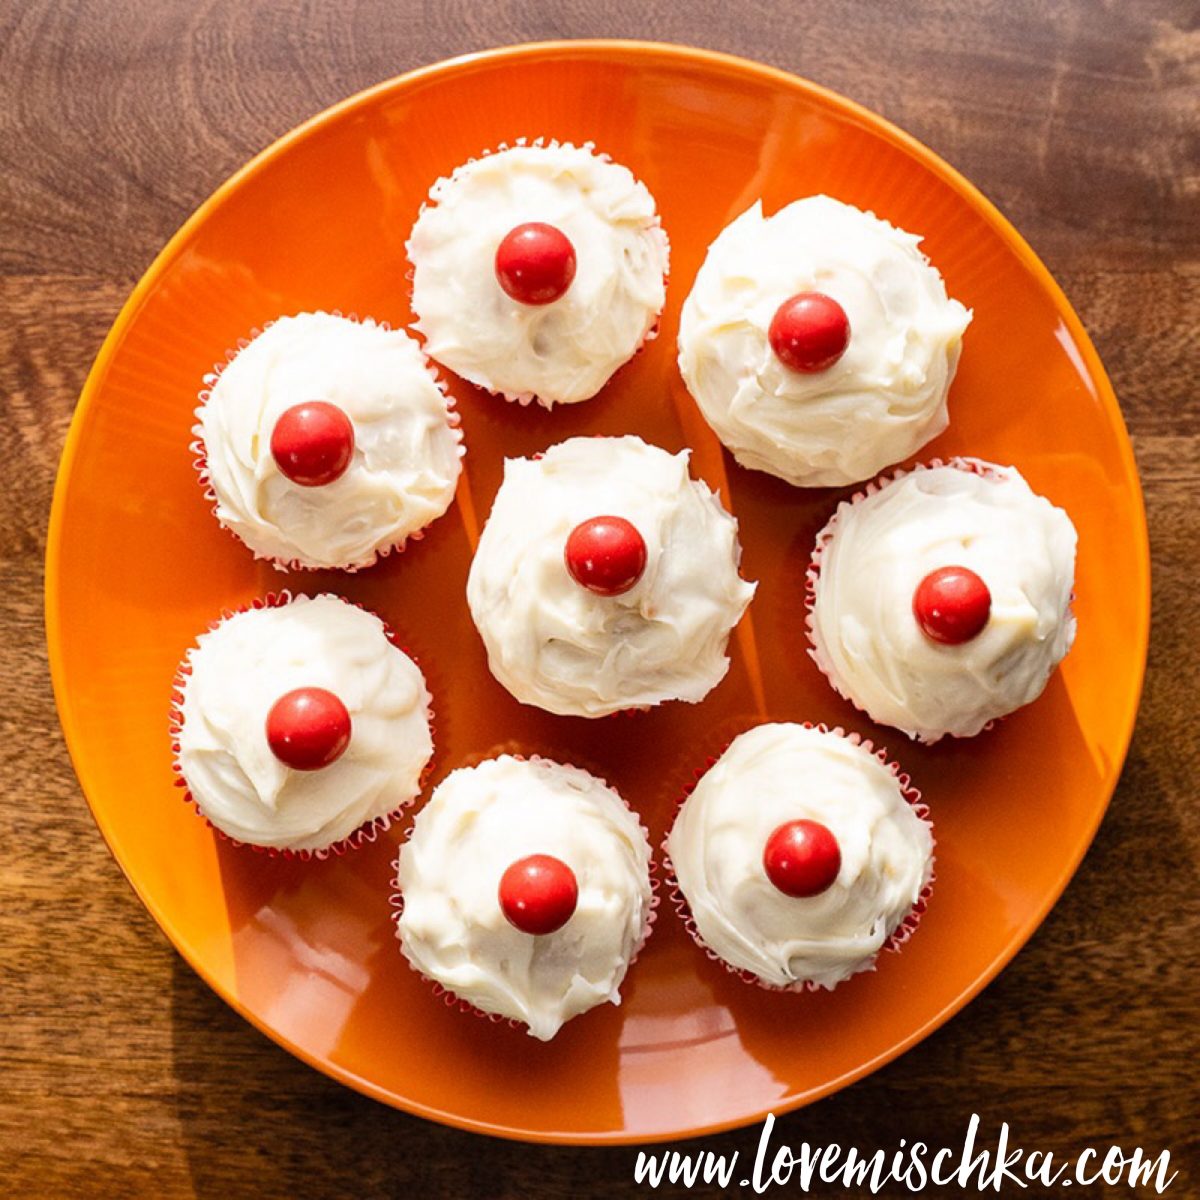 Fireball Poke Cupcakes